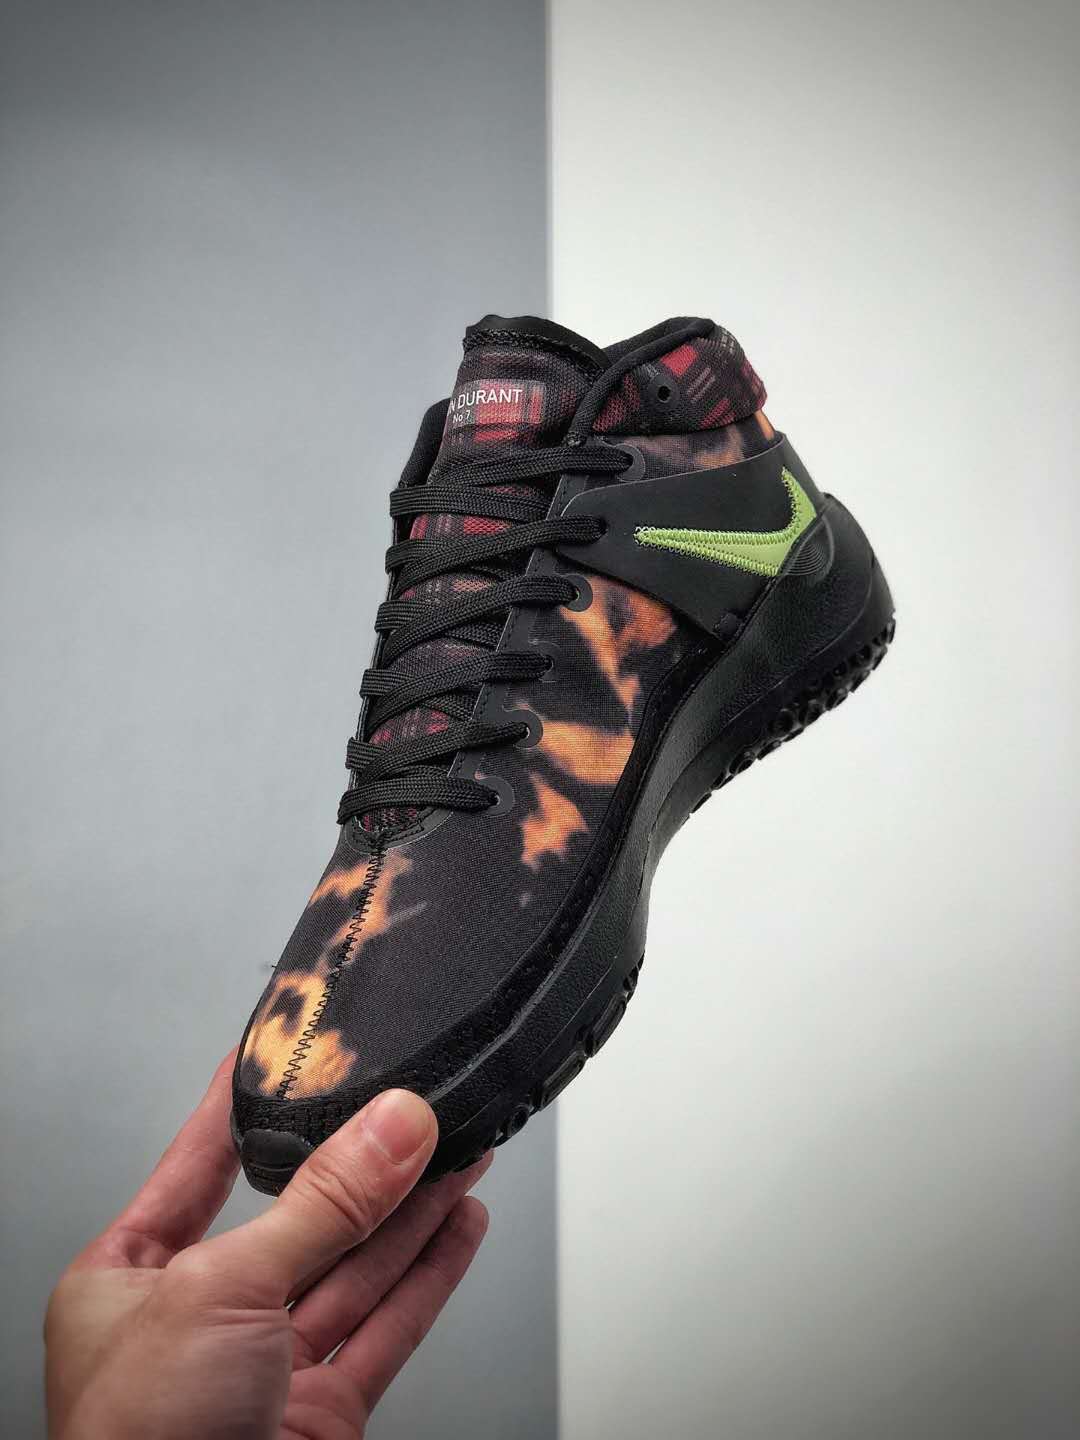 Nike KD 13 Black Grid Grille Noire Mens Shoes - Shop Now at [Website Name]